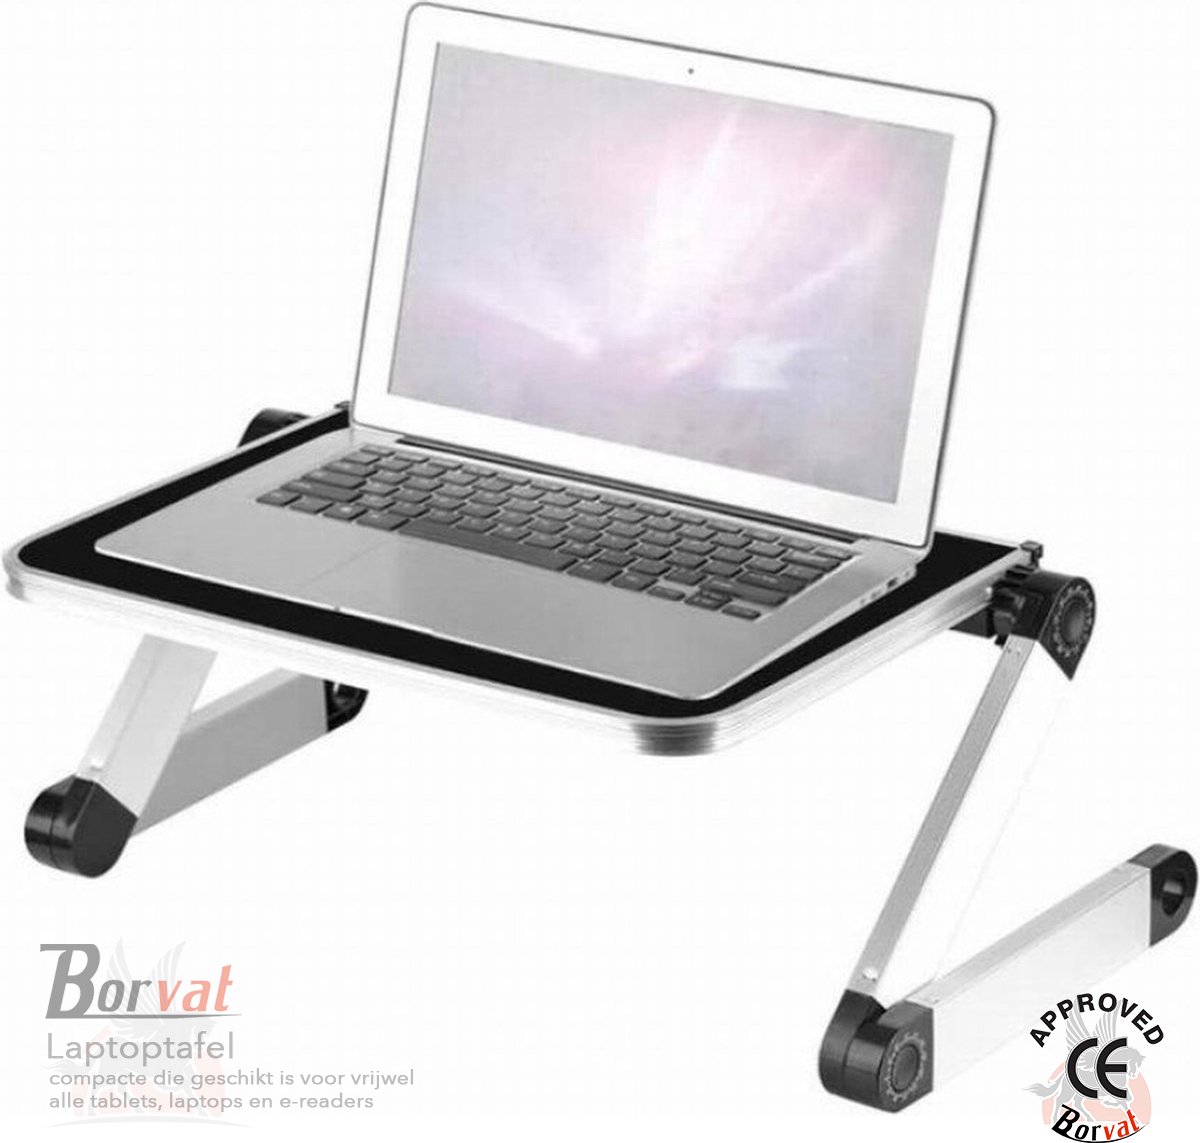 Borvat® - Laptoptafel - Laptopstandaard - Laptop - Laptop stand - Verstelbaar - Ergonomische opvouwbare laptoptafel - 360 graden verstelbaar